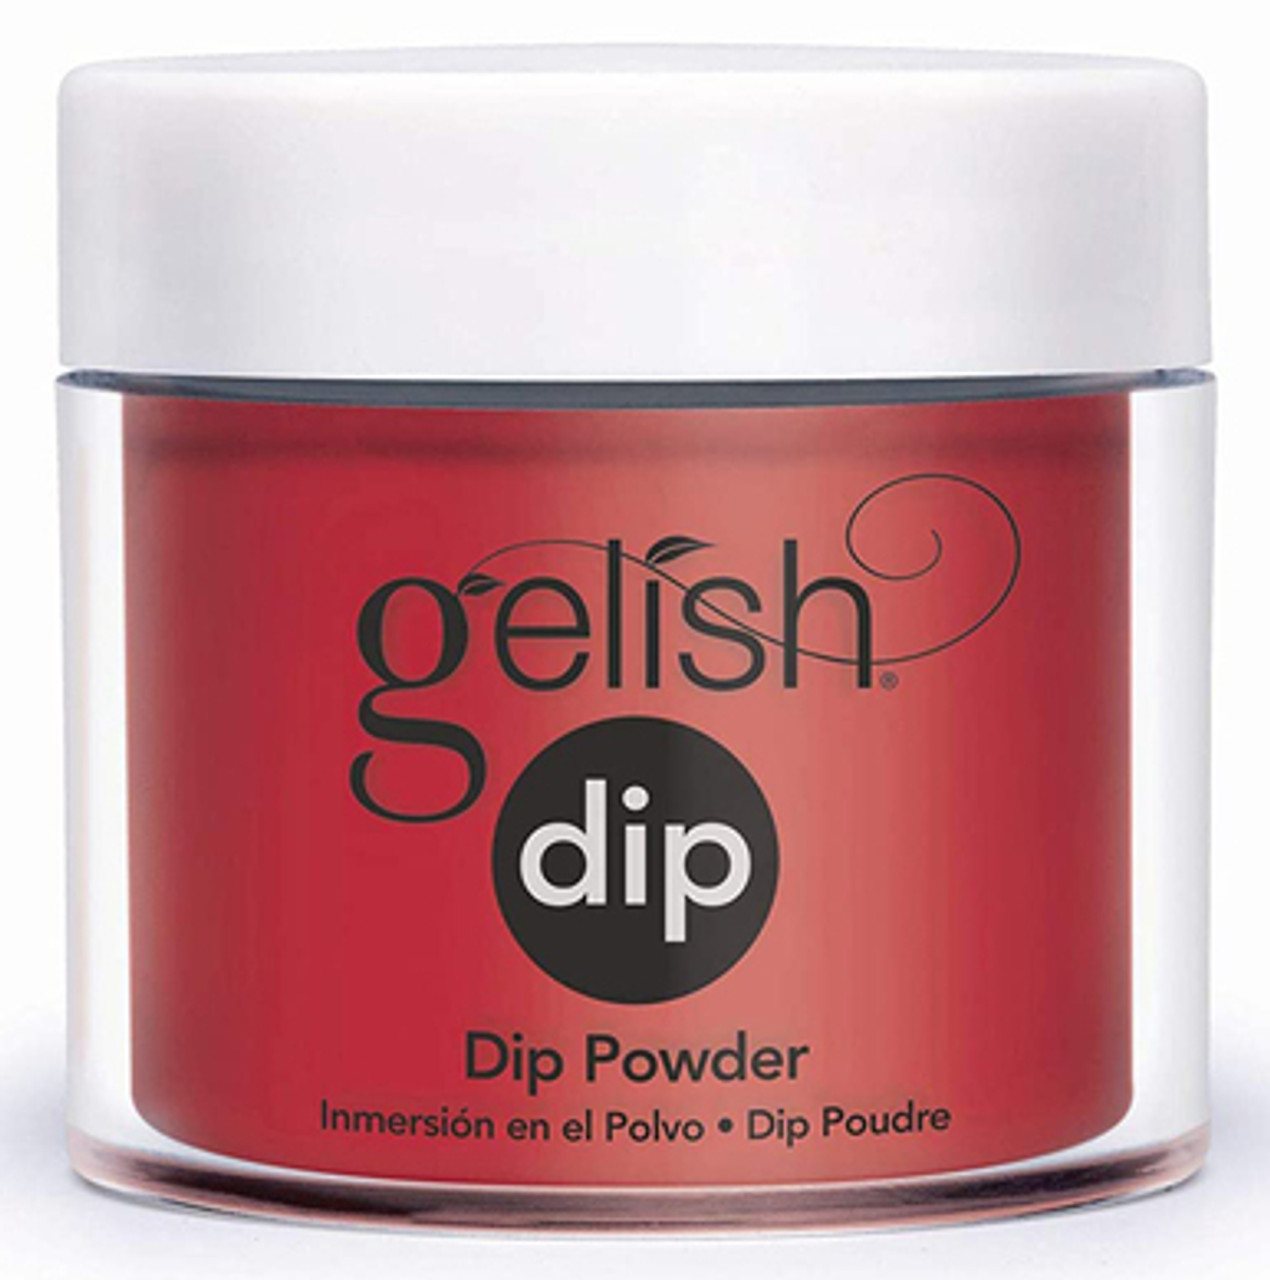 Gelish Dip Powder Classic Red Lips - 0.8 oz / 23 g